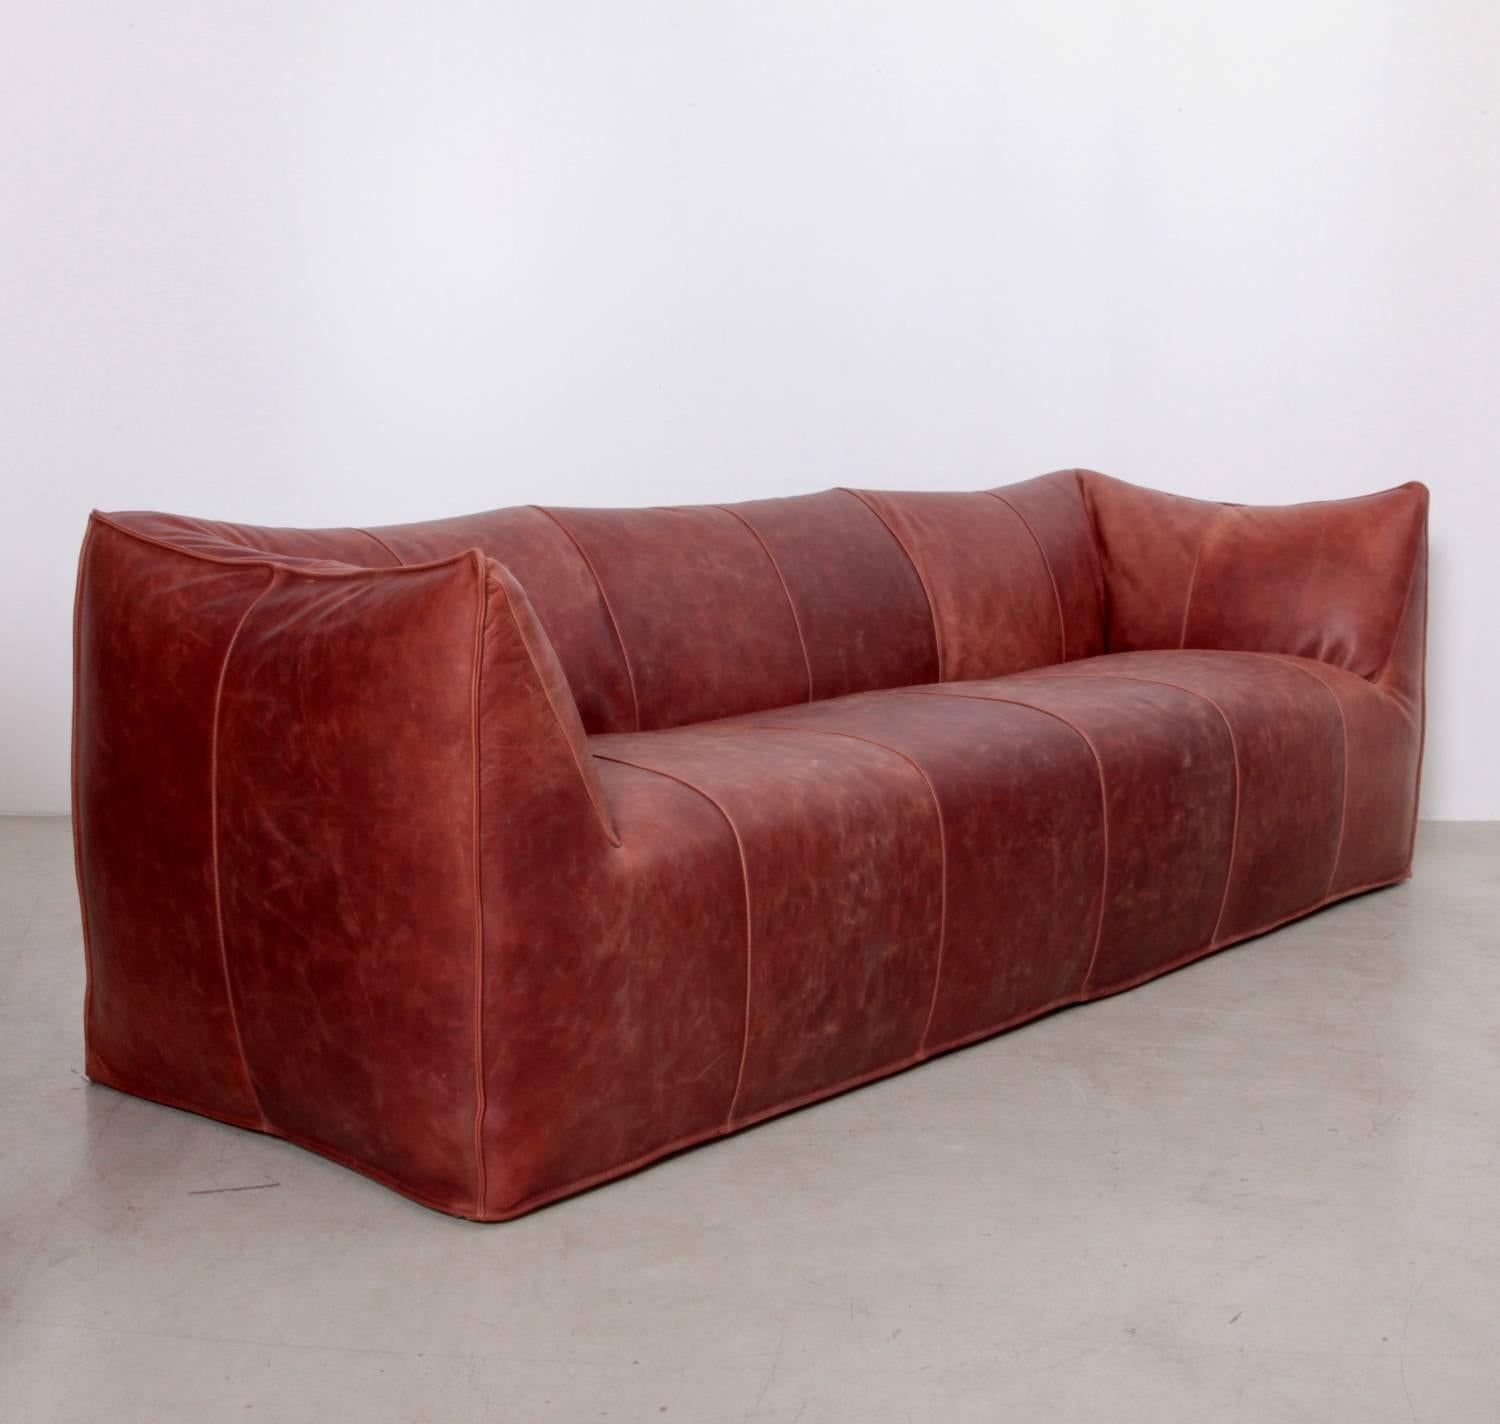 Three-seat 'Bambole' sofa, designed by Mario Bellini for B&B Italia in 1972. Very nice and high quality usable large sofa. Sofa is marked ‘B&B Italia, le Bambole, Mario Bellini’. Reupholstered in a high quality aniline leather.